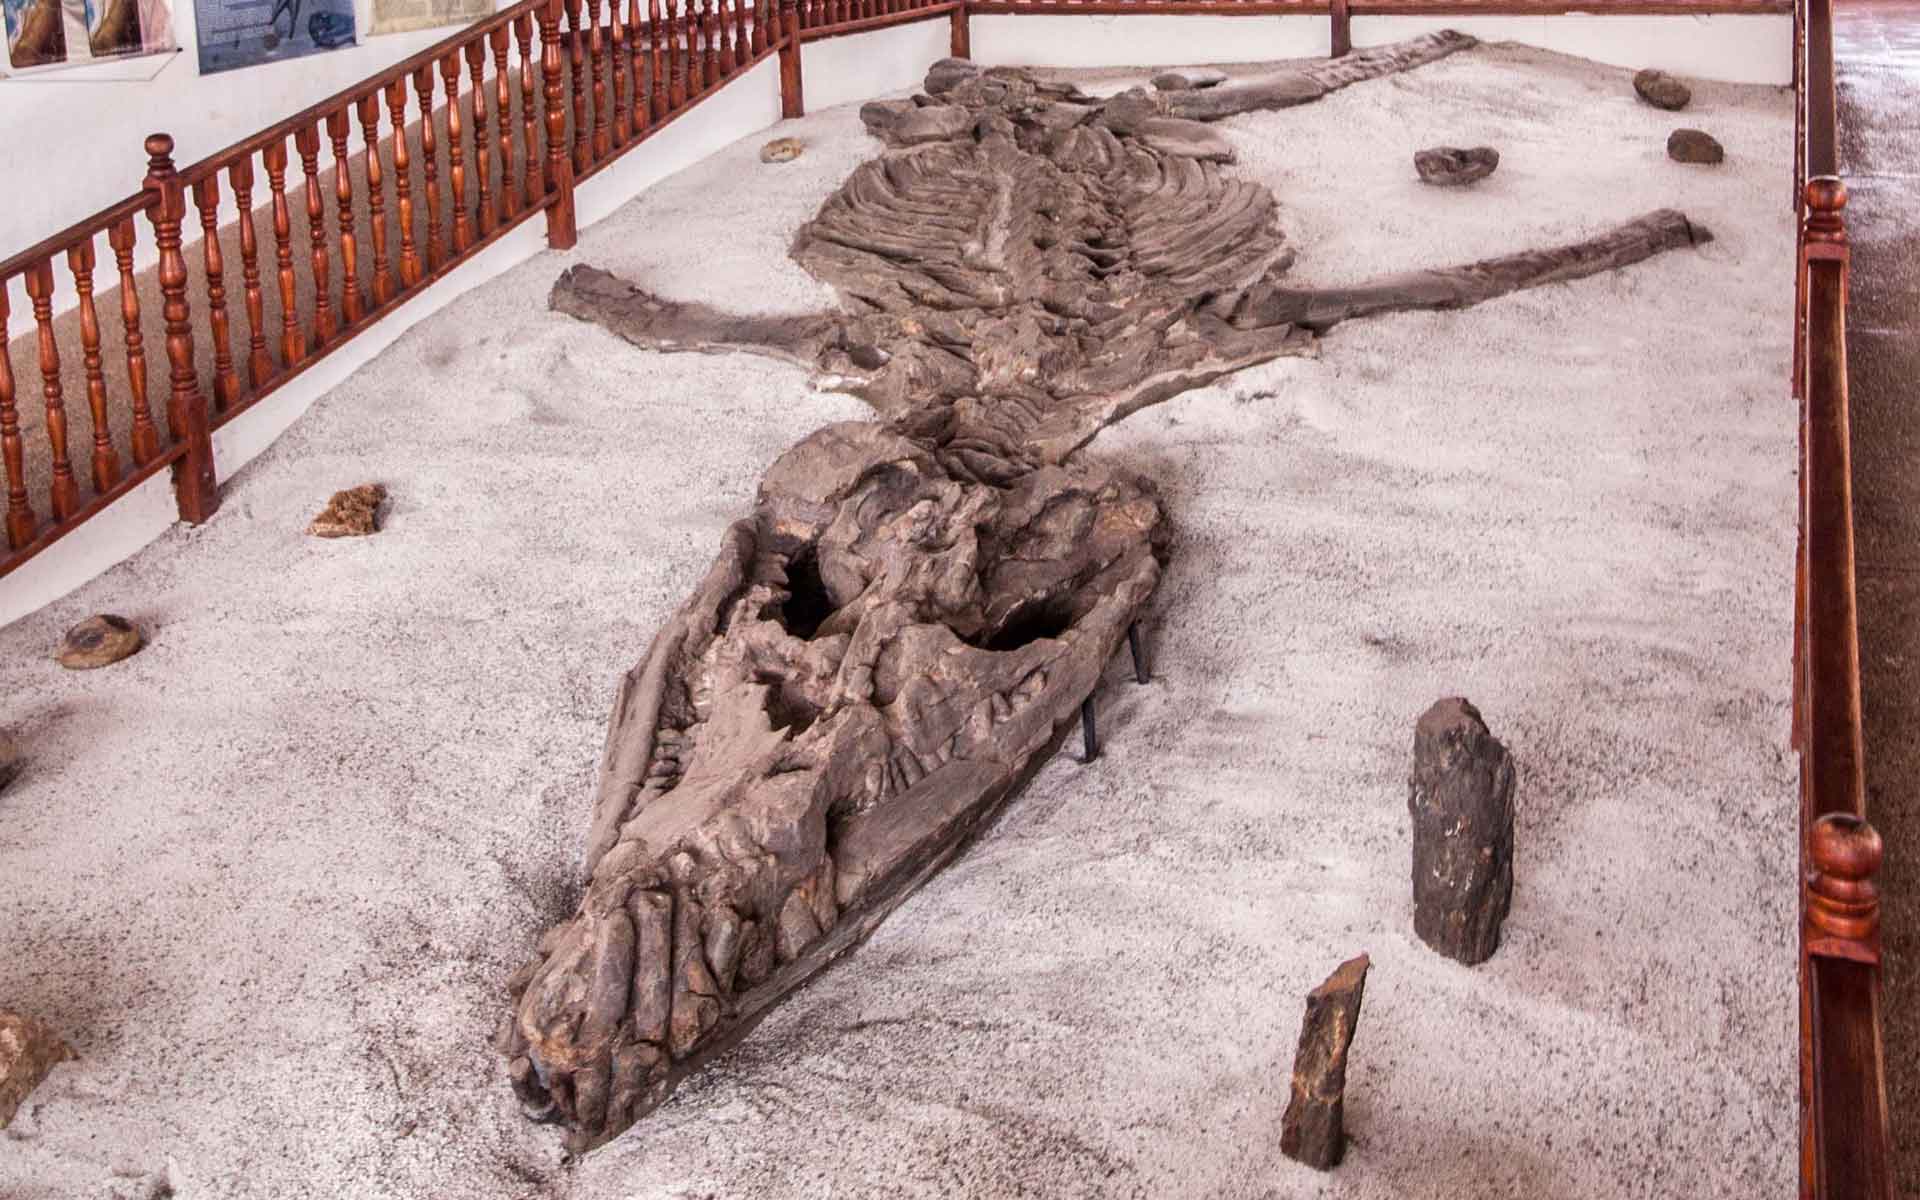 Early Cretaceous marine megapredator